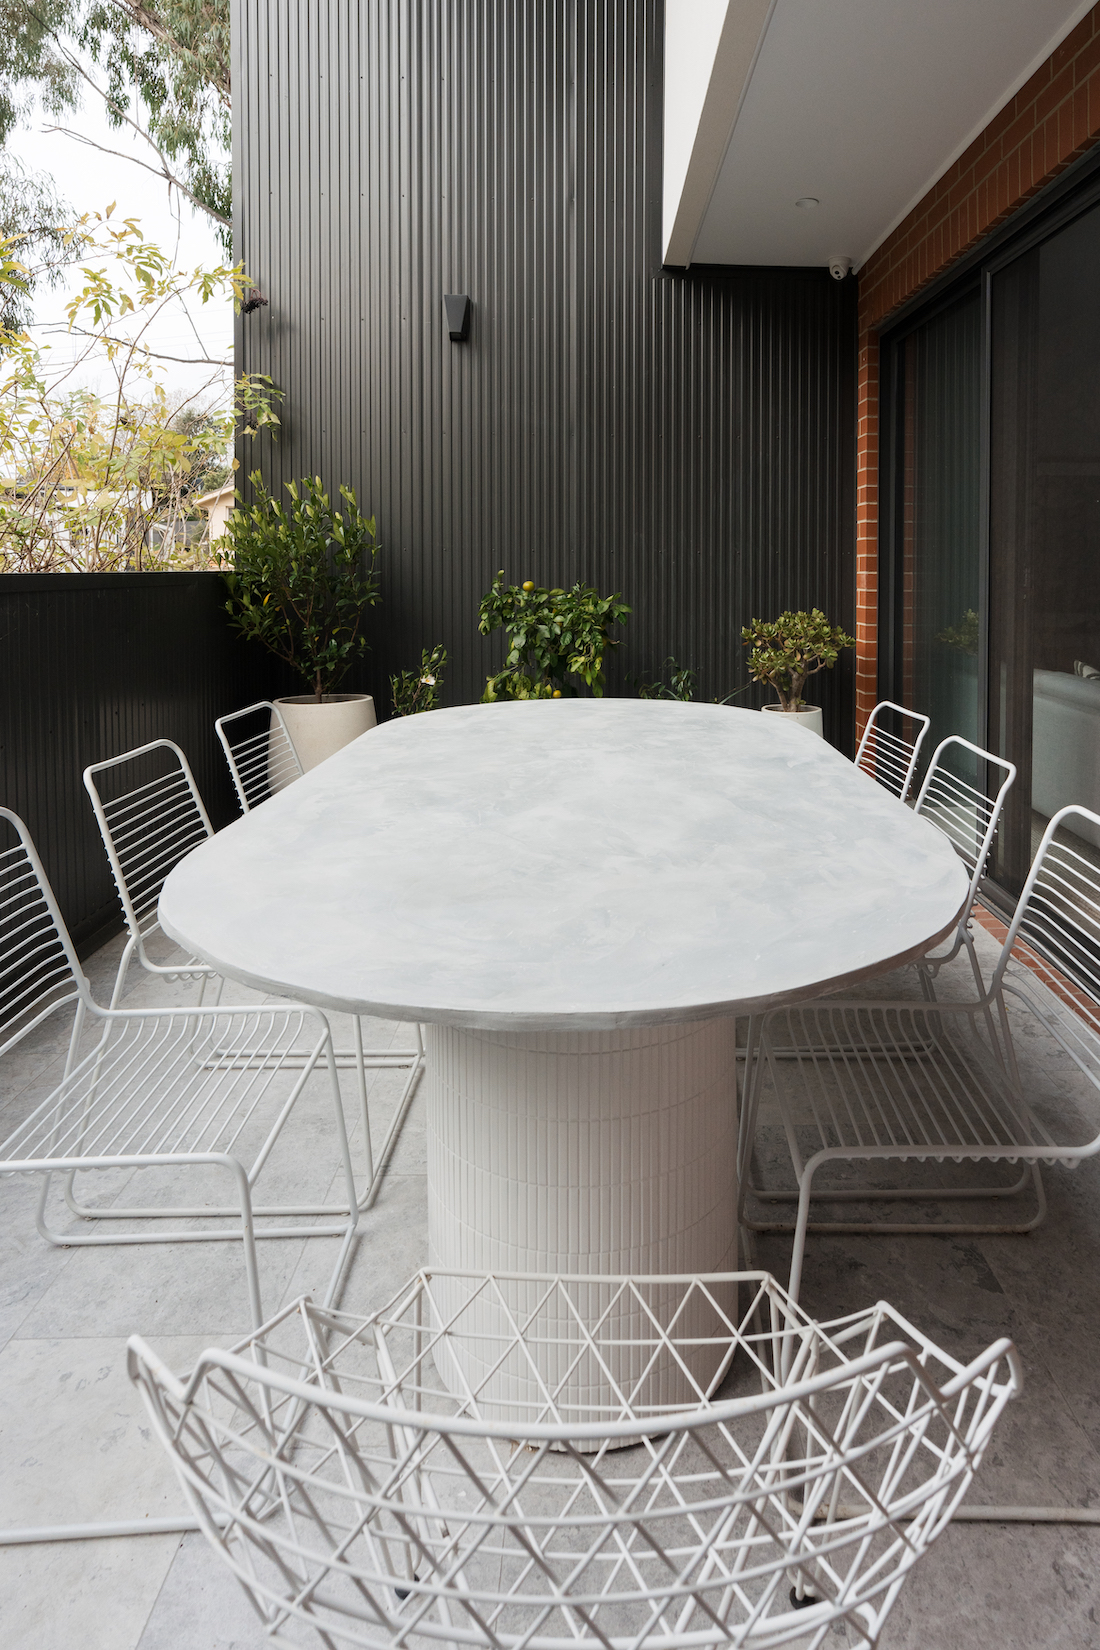 DIY concrete outdoor table